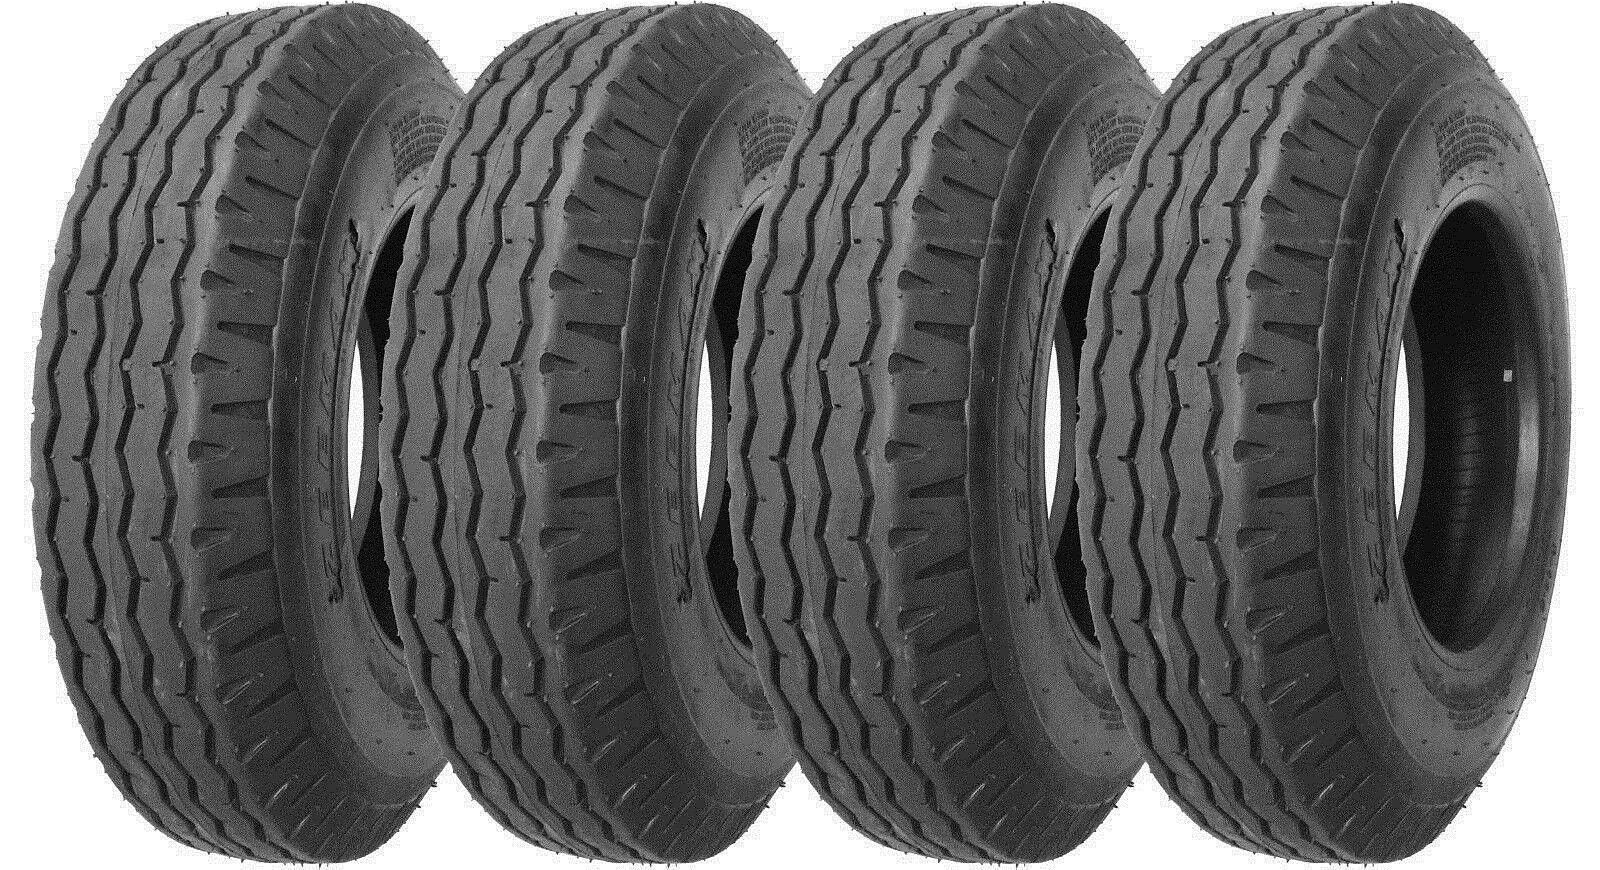 Set 4 8-14.5 8x14.5 Trailer Tires 8 14.5 Heavy Duty Highway 14PR LR G 11067 -New